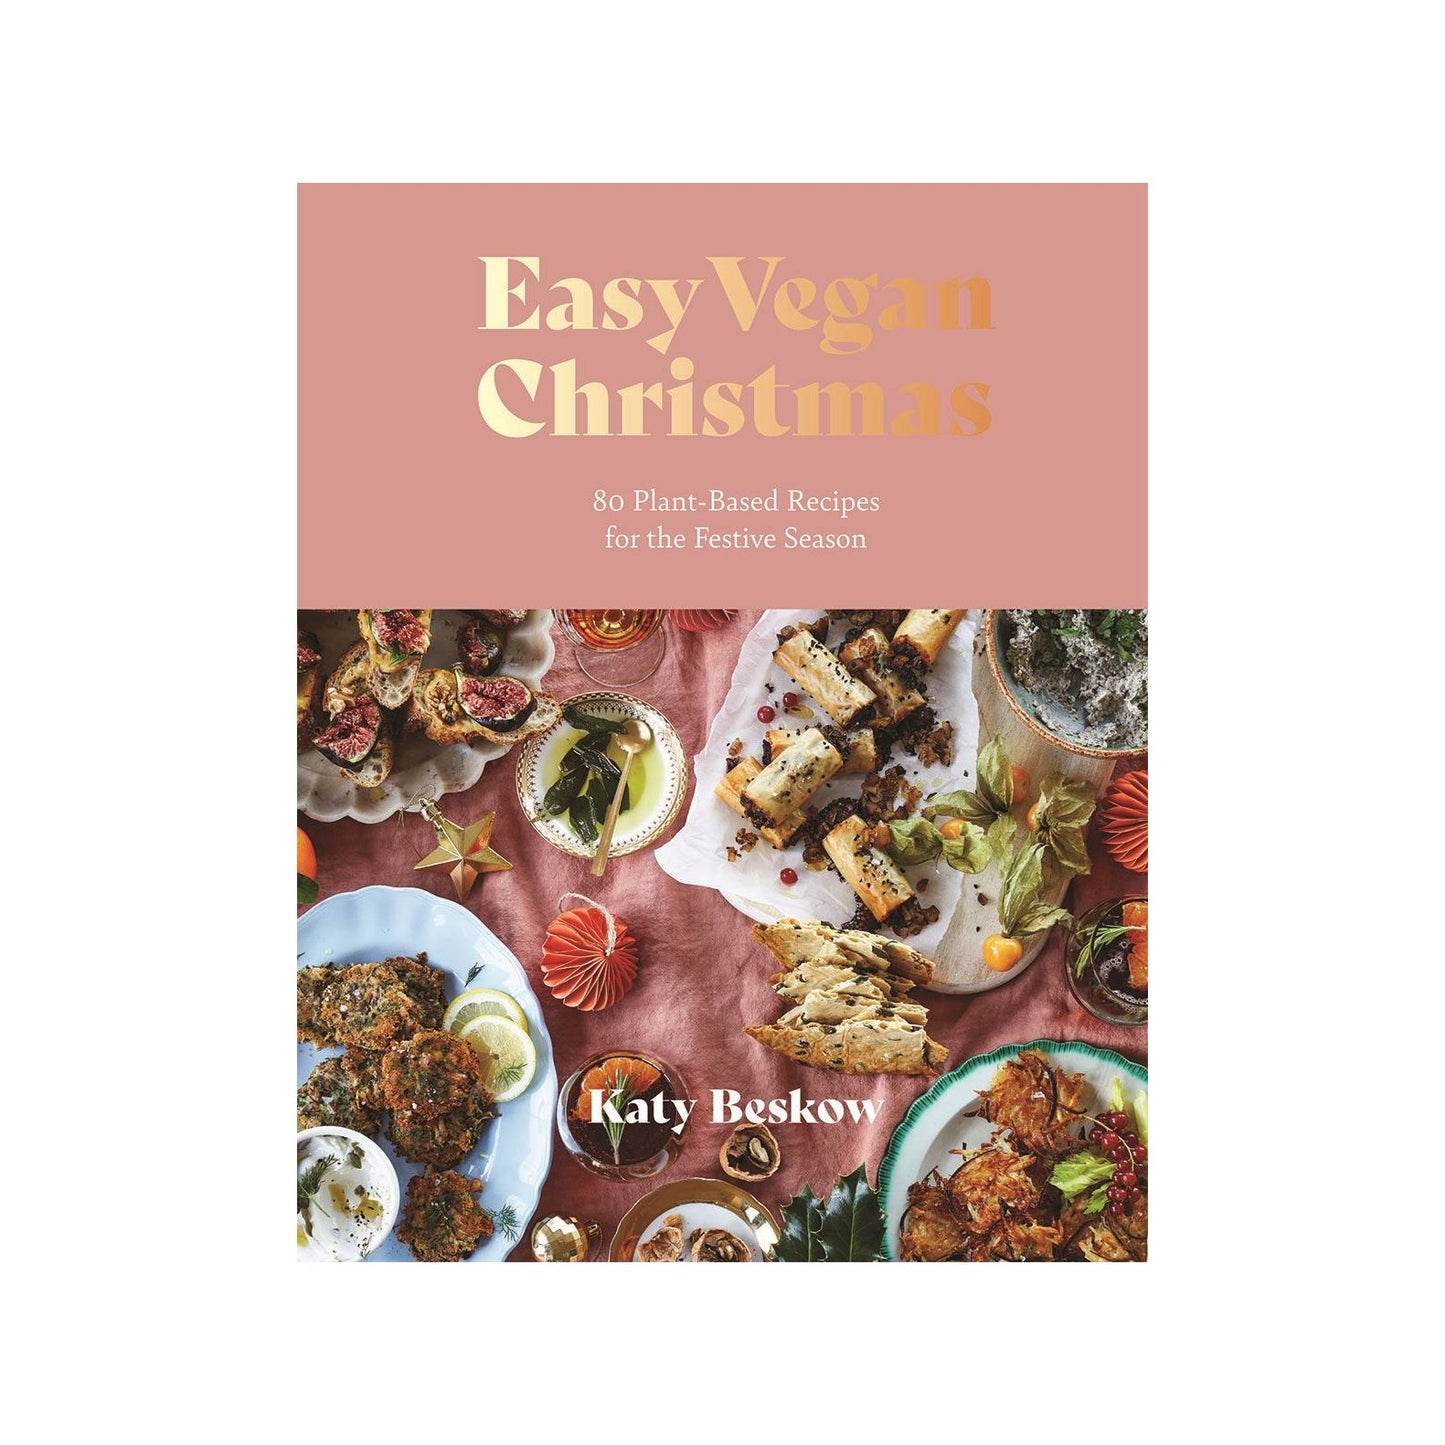 Easy Vegan Christmas: 80 Plant Based Recipes